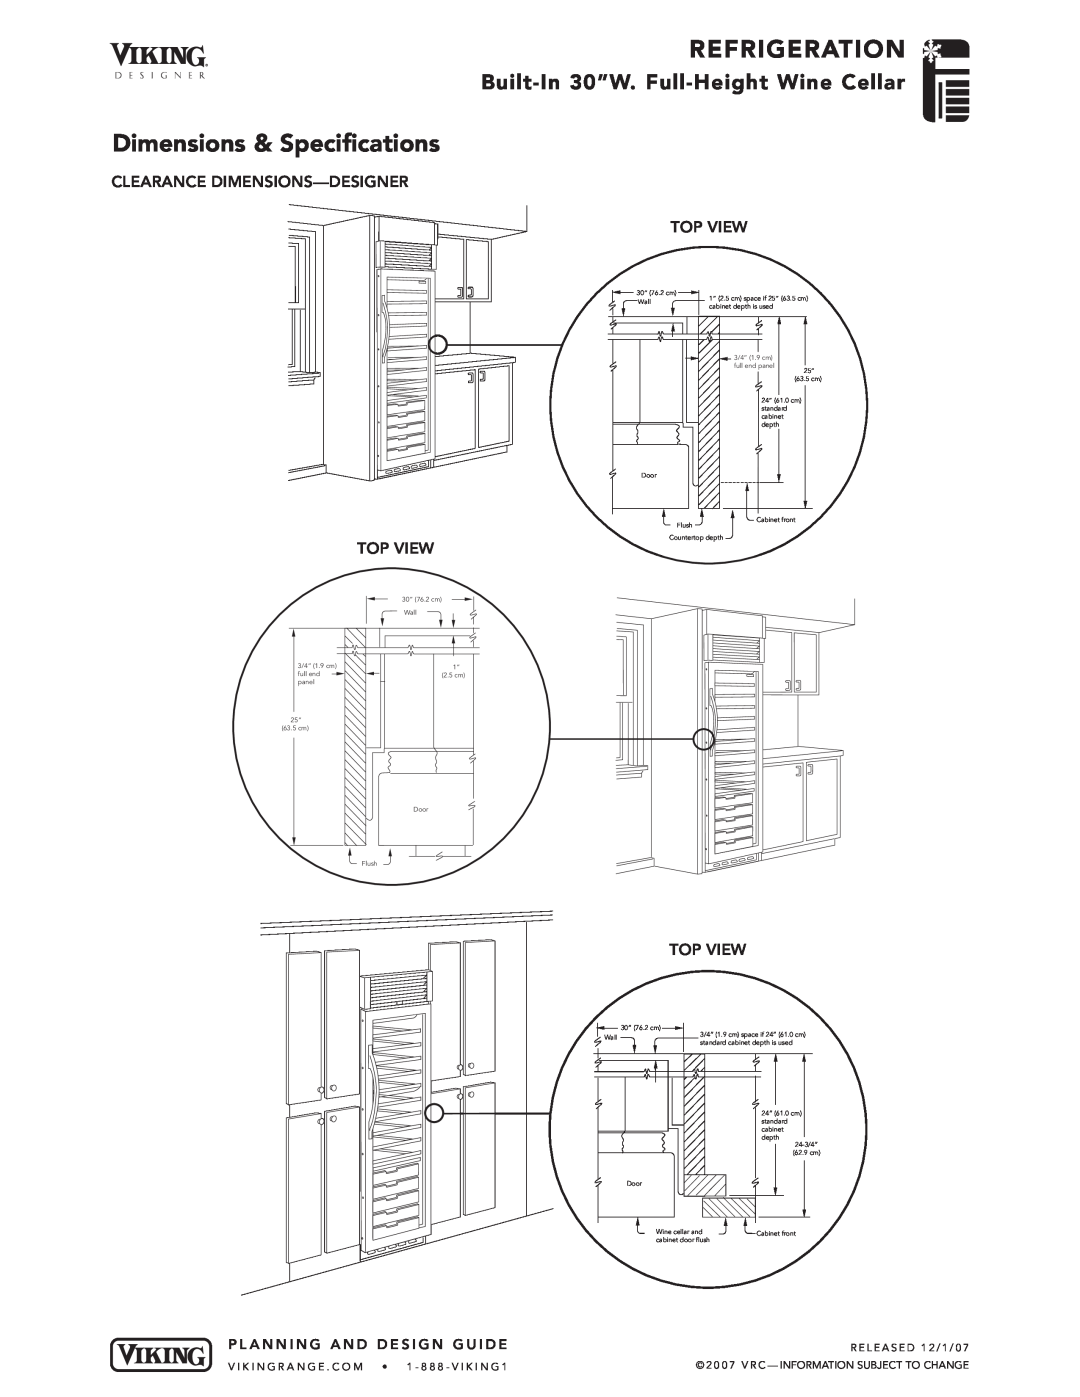 Viking DDWB300, VCWB300 Refrigeration, Dimensions & Specifications, Built-In30”W. Full-HeightWine Cellar, R E L E A S E D 